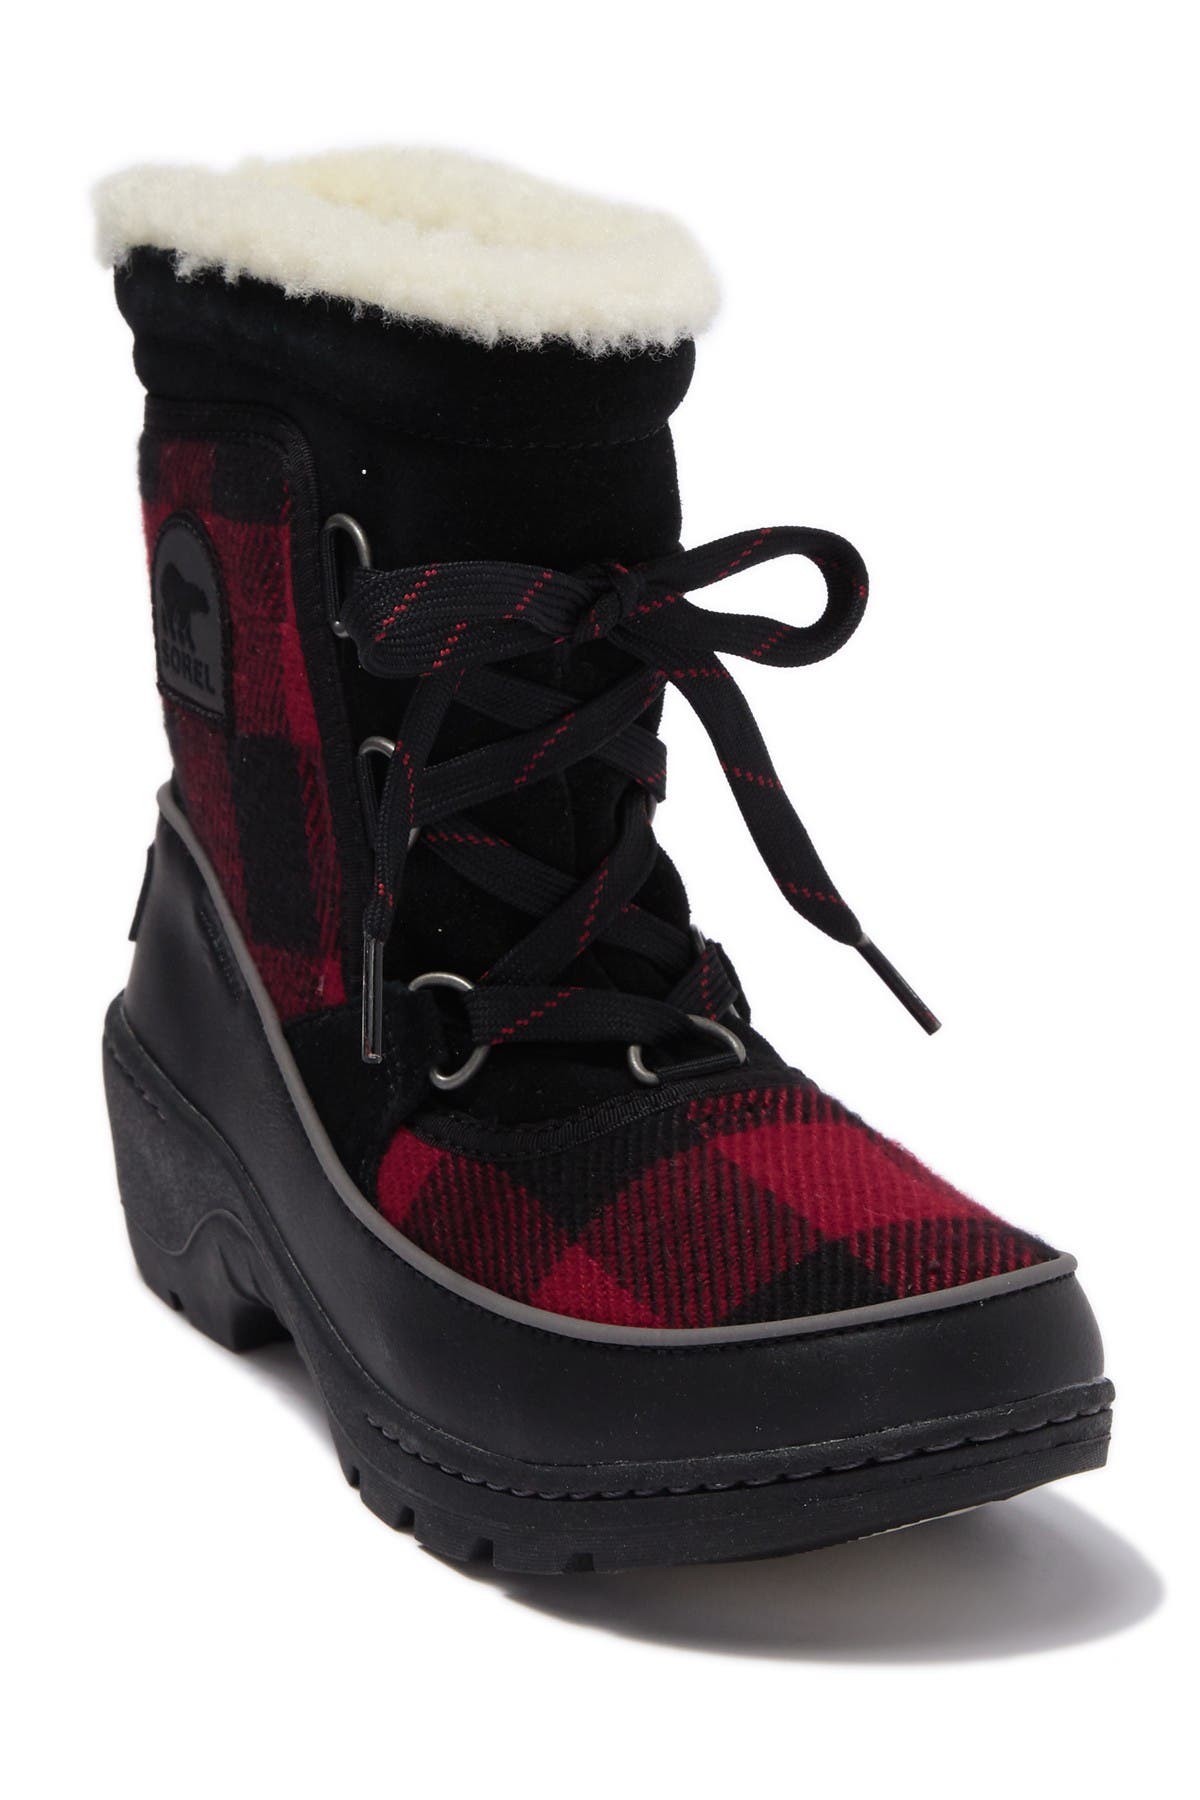 sorel snow boots nordstrom rack